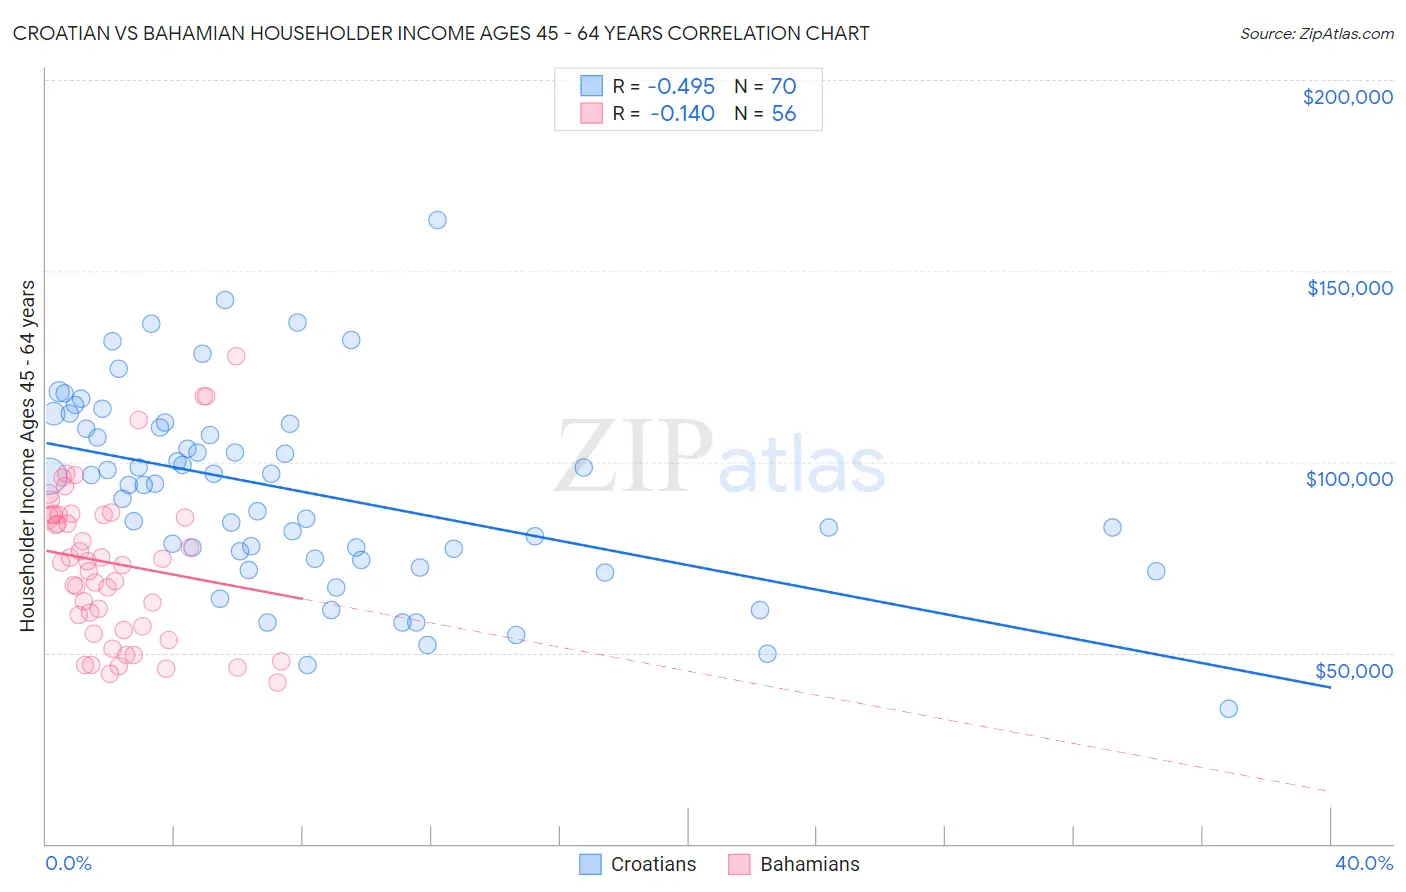 Croatian vs Bahamian Householder Income Ages 45 - 64 years